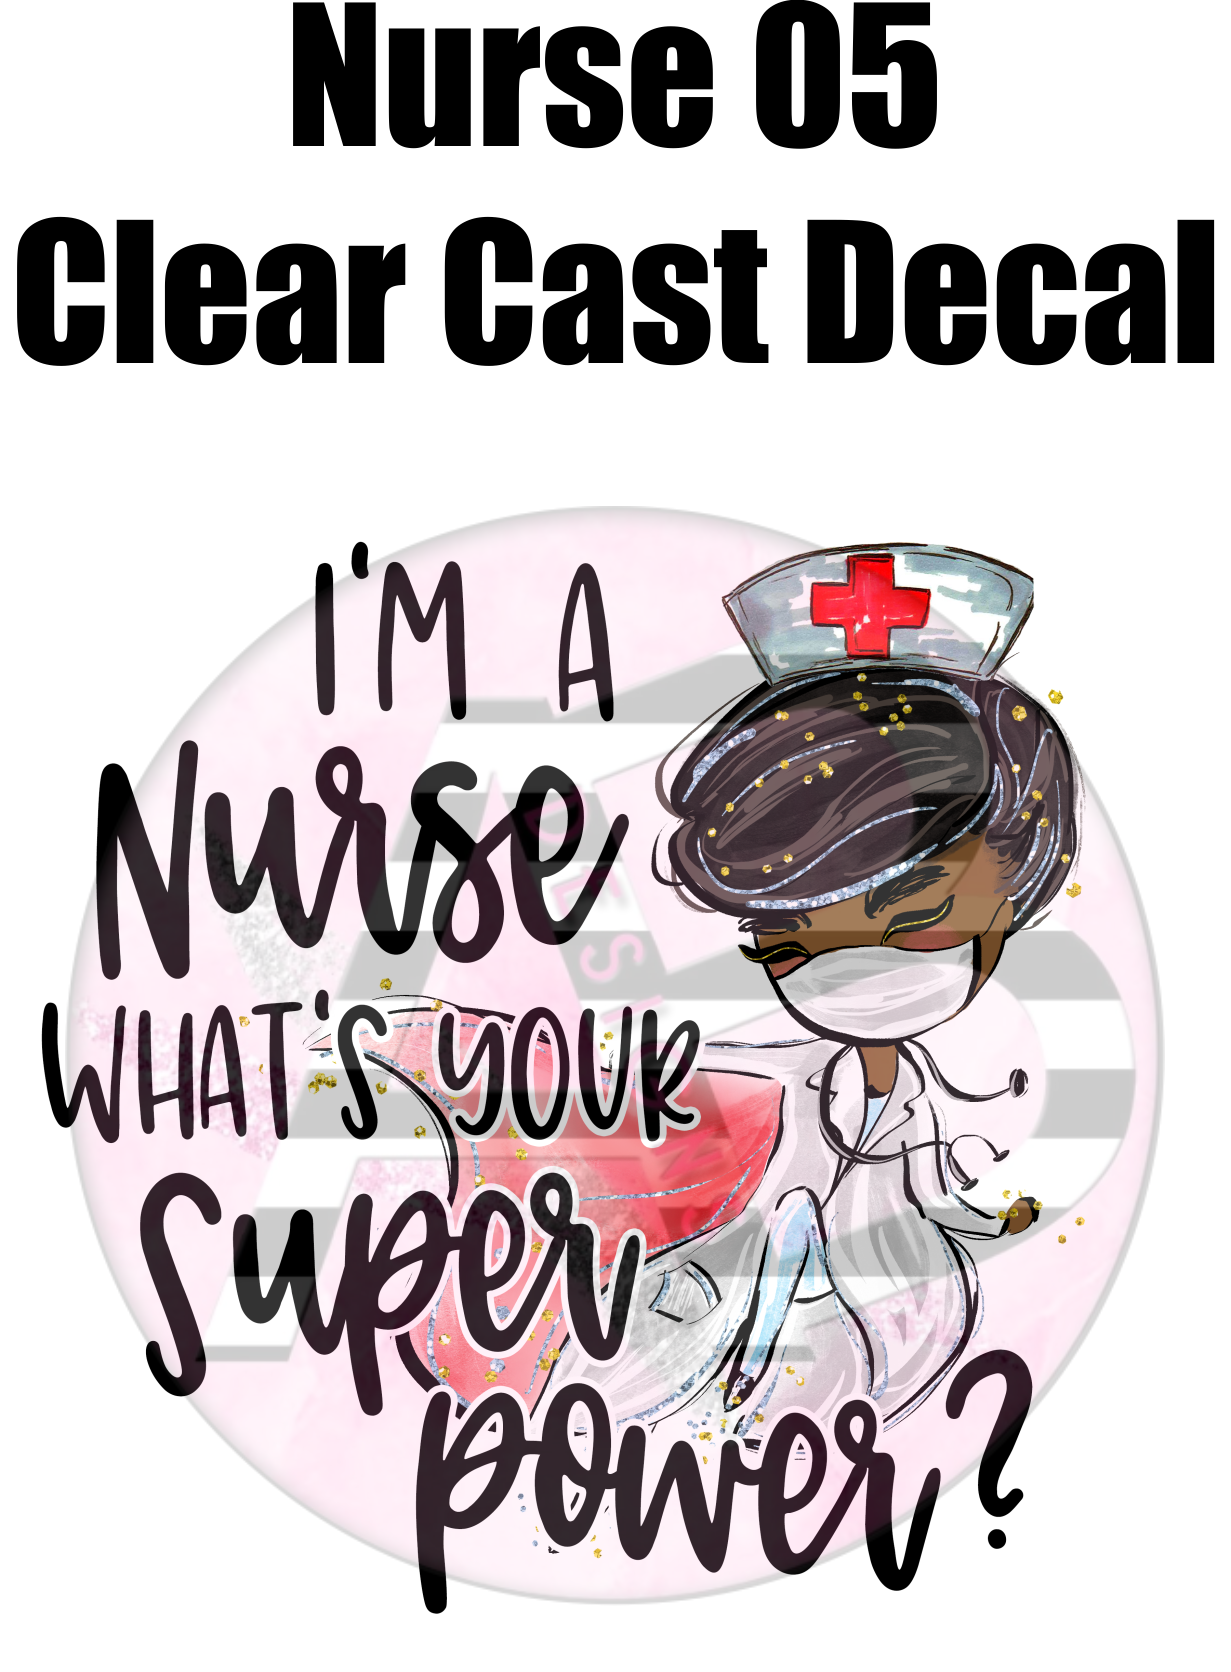 Nurse 05 - Clear Cast Decal